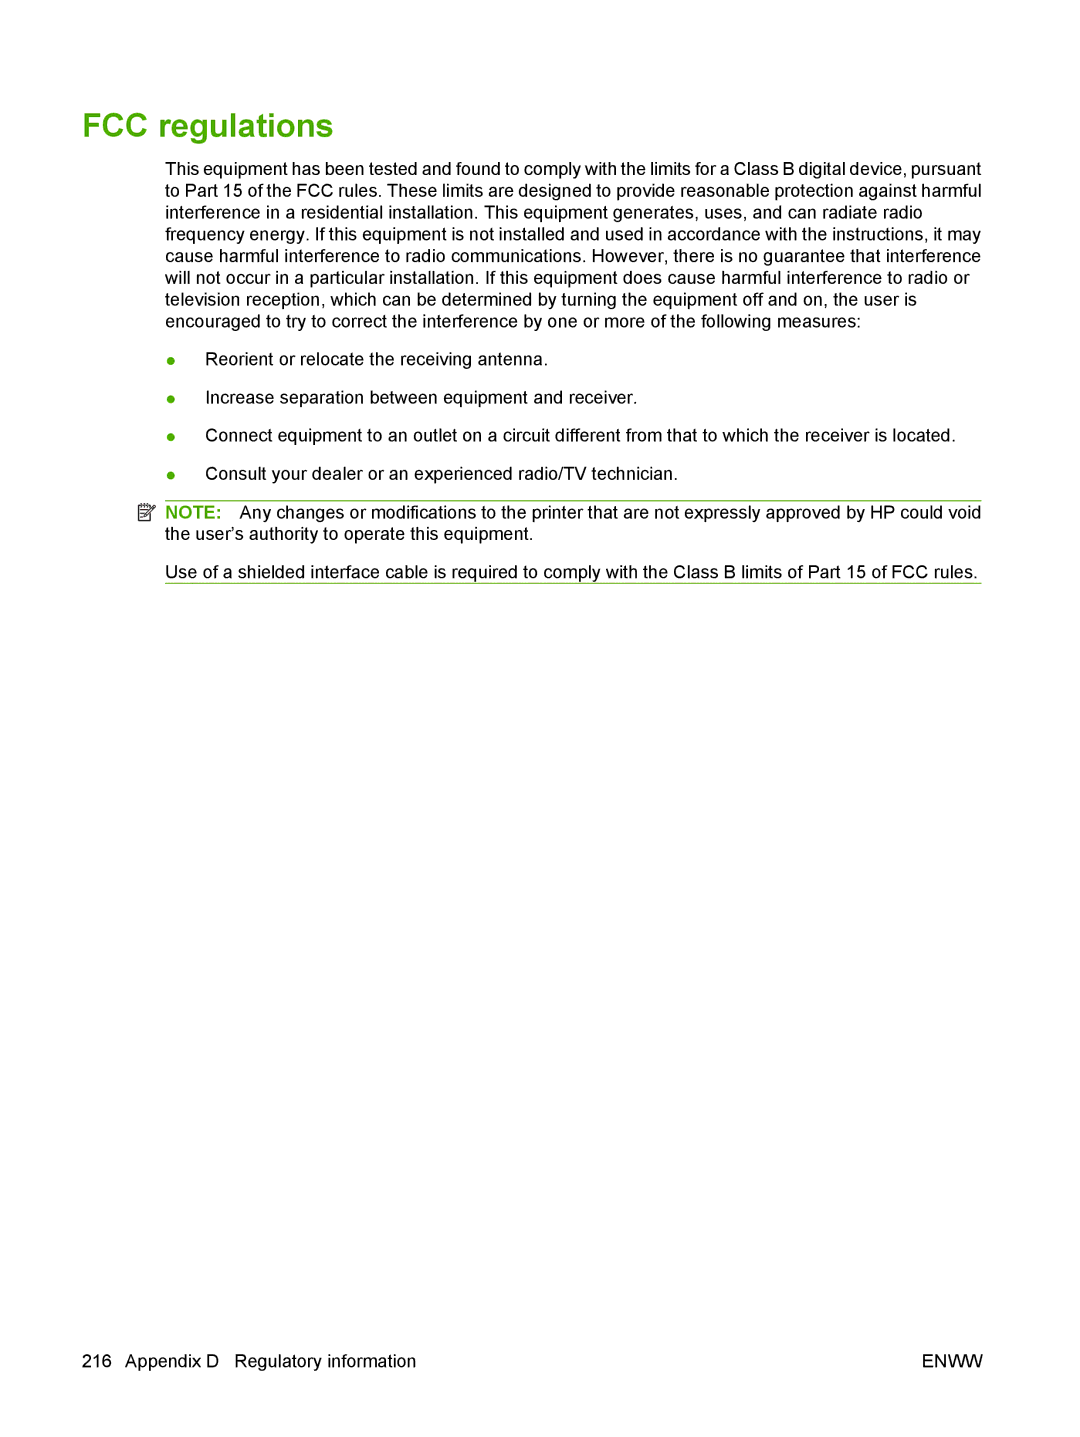 HP Laser CE527A#ABA manual FCC regulations 